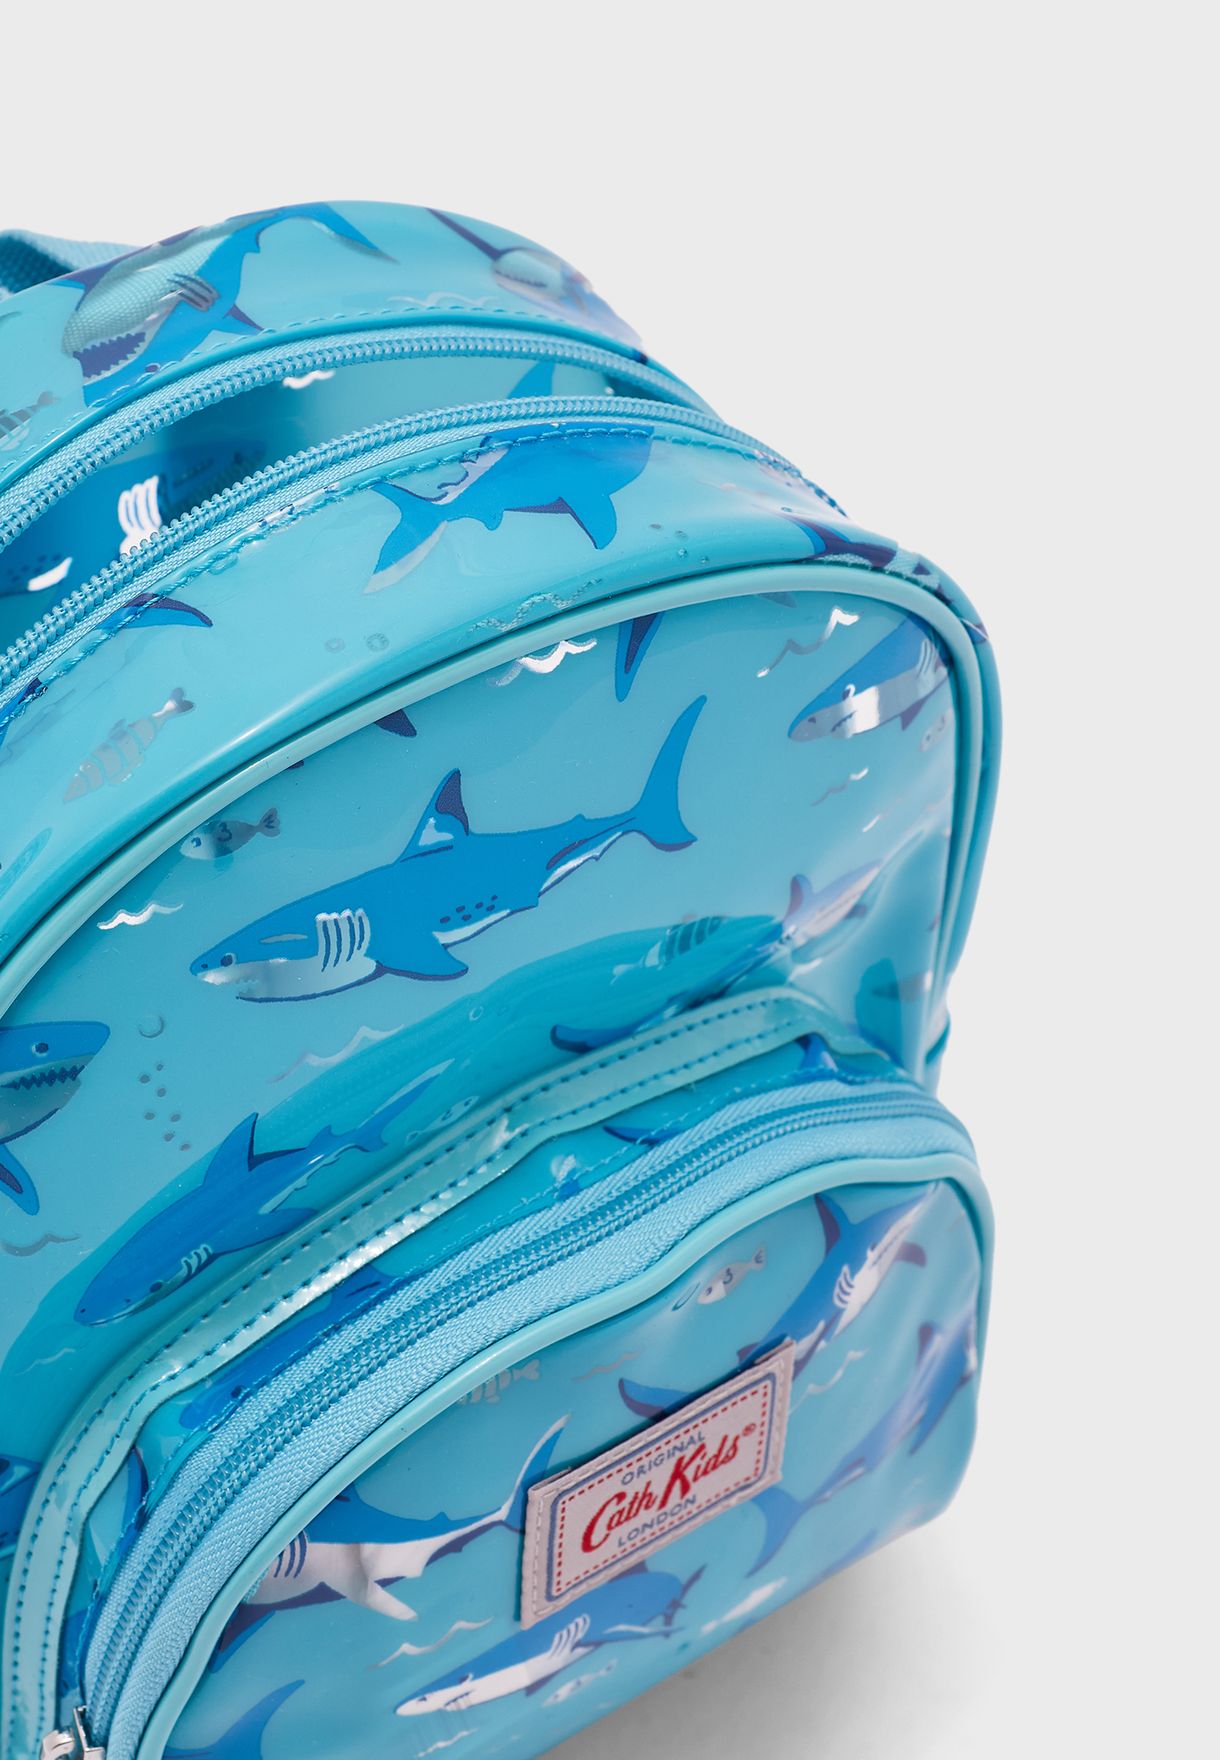 cath kidston shark backpack